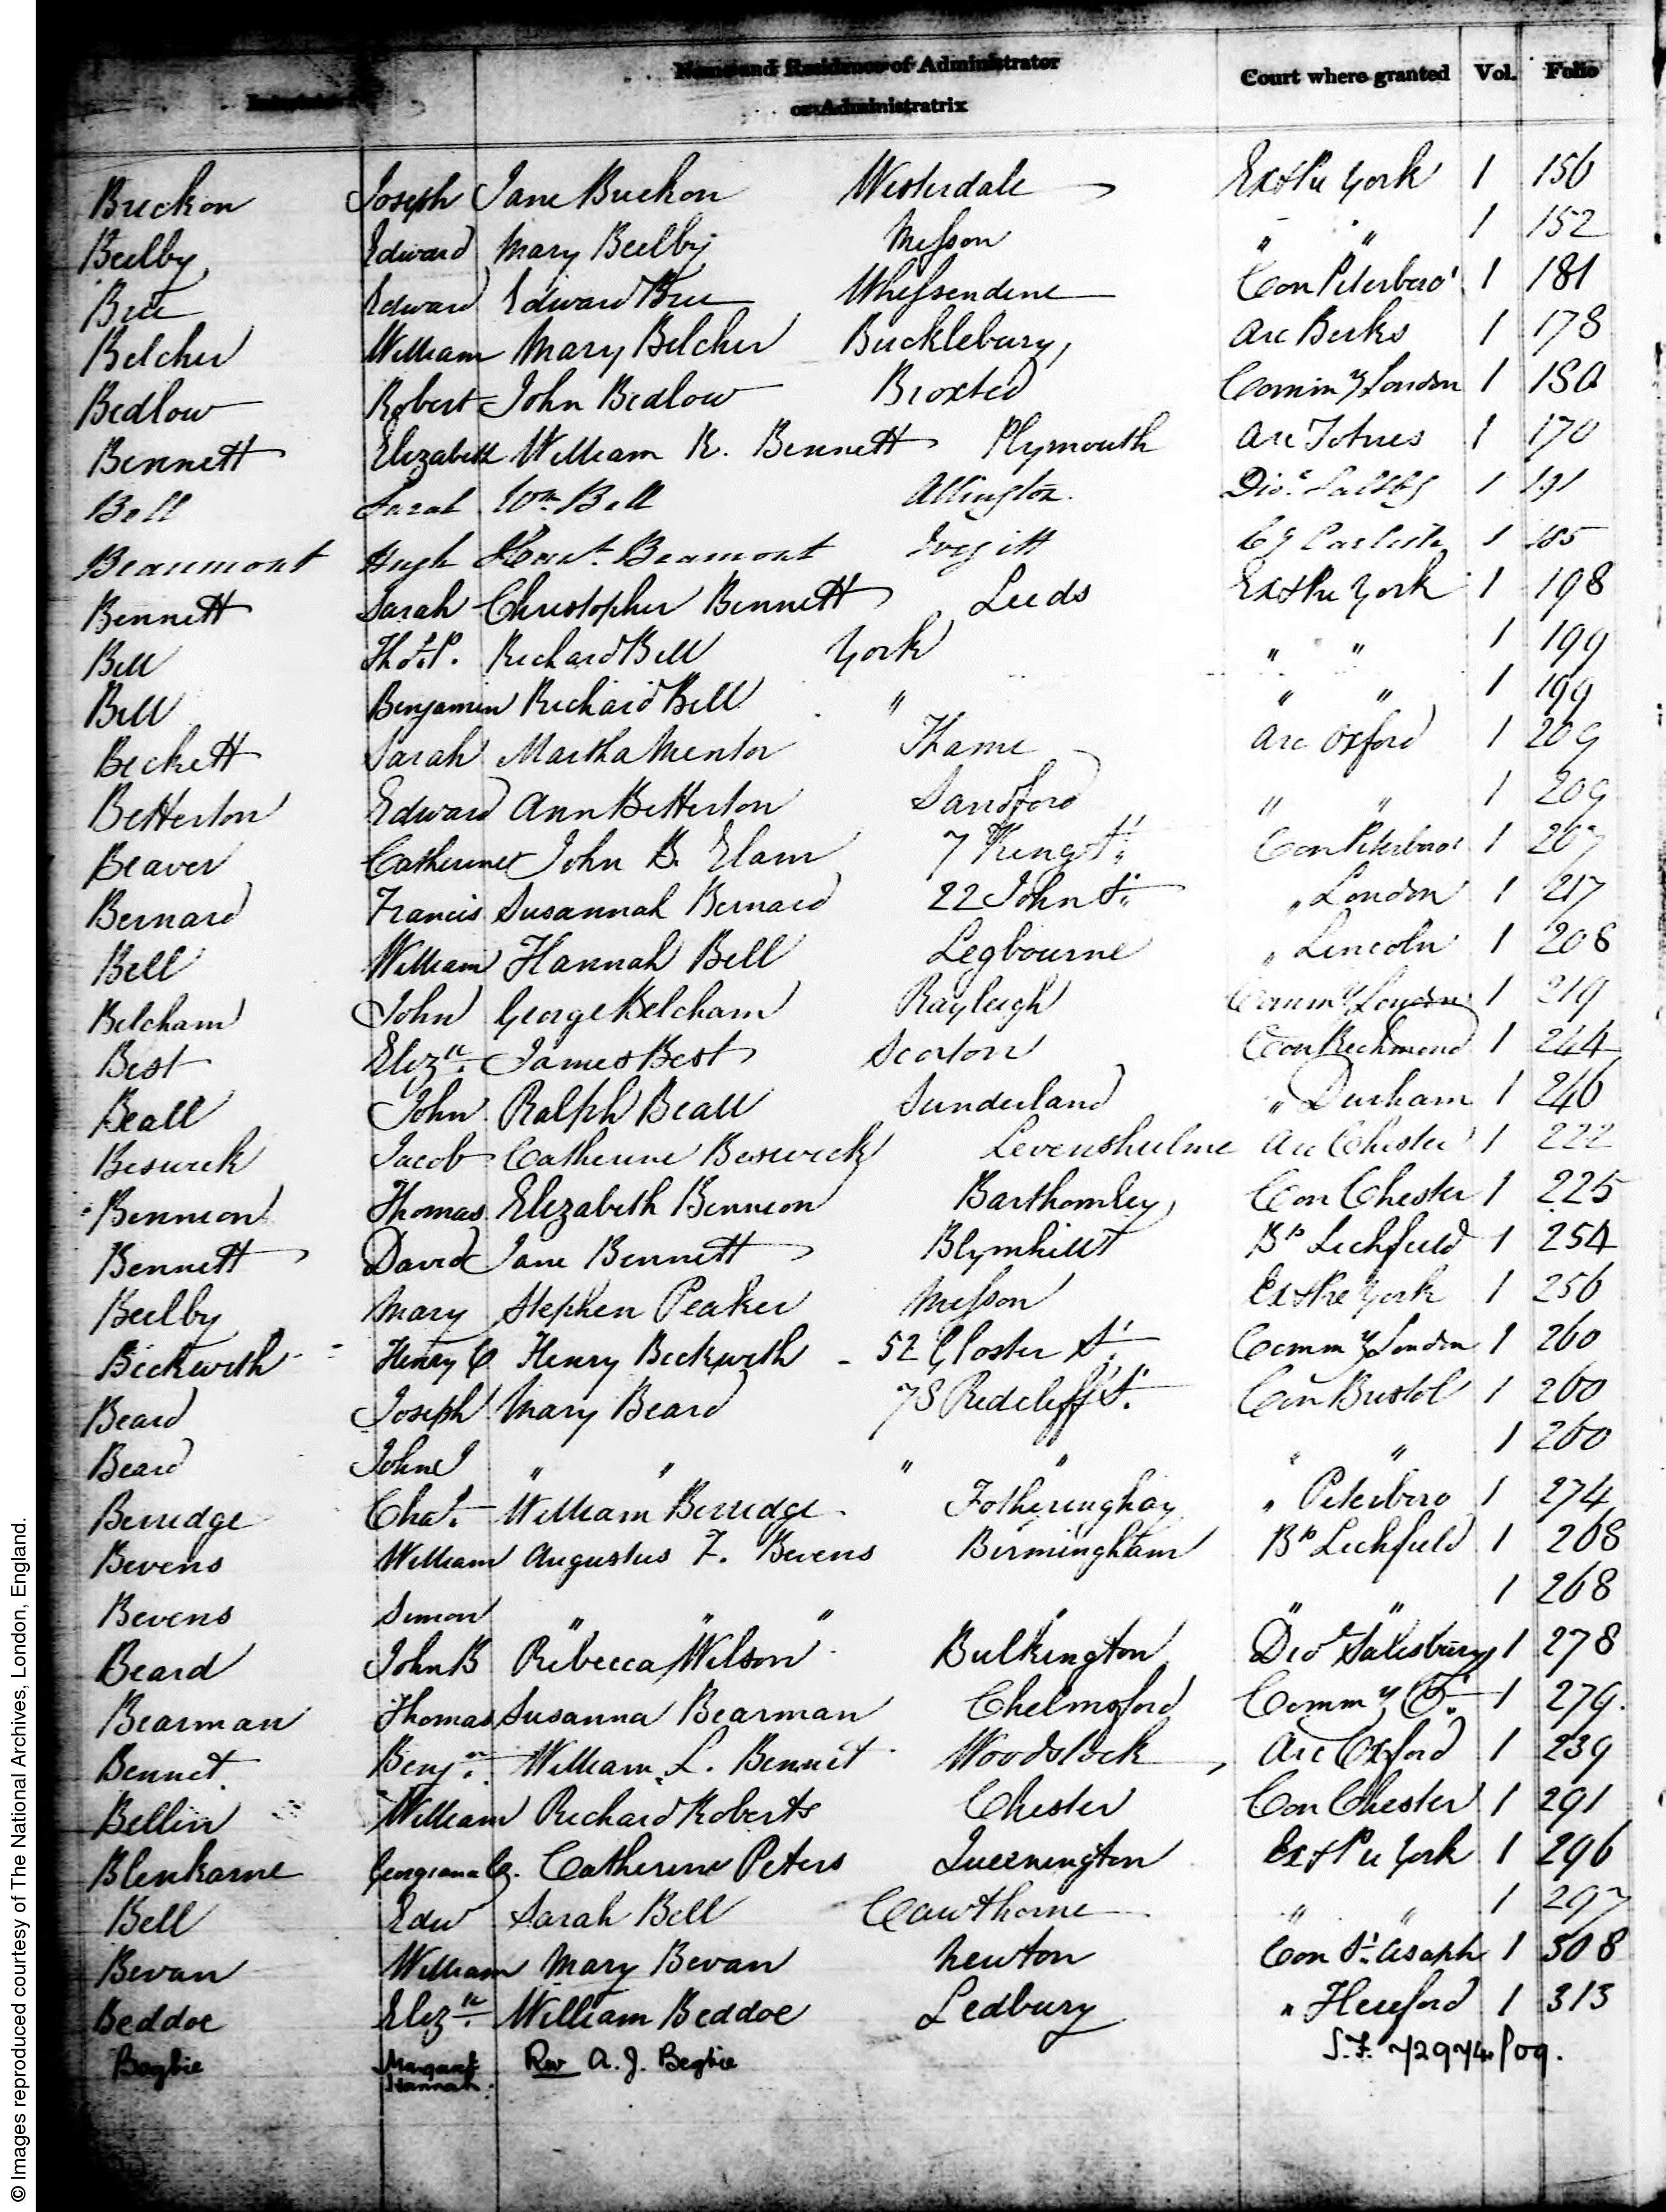 Thomas Bearman listed in the Index to Death Duty Registers 1827, Susanna Bearman as executrix